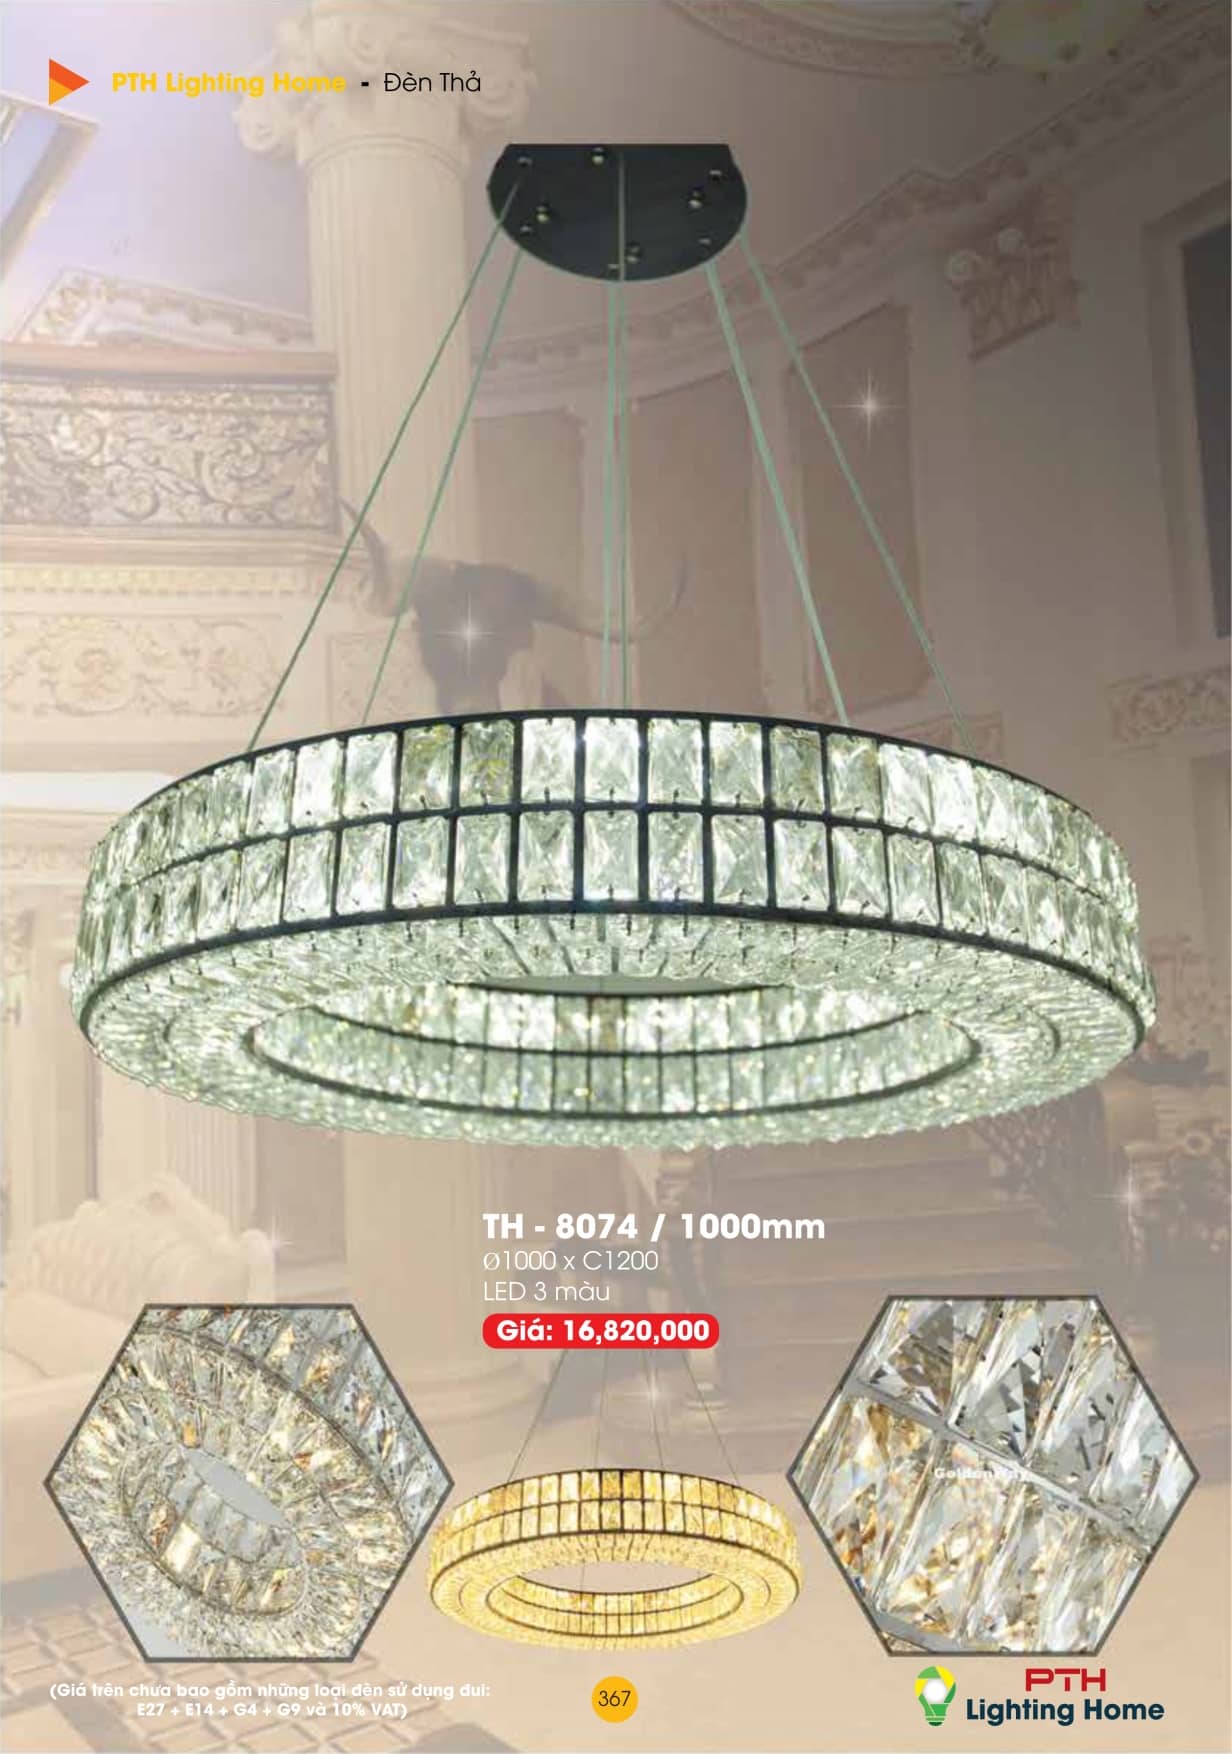 catalogue-bang-gia-den-led-trang-tri-pth-lighting-home-369